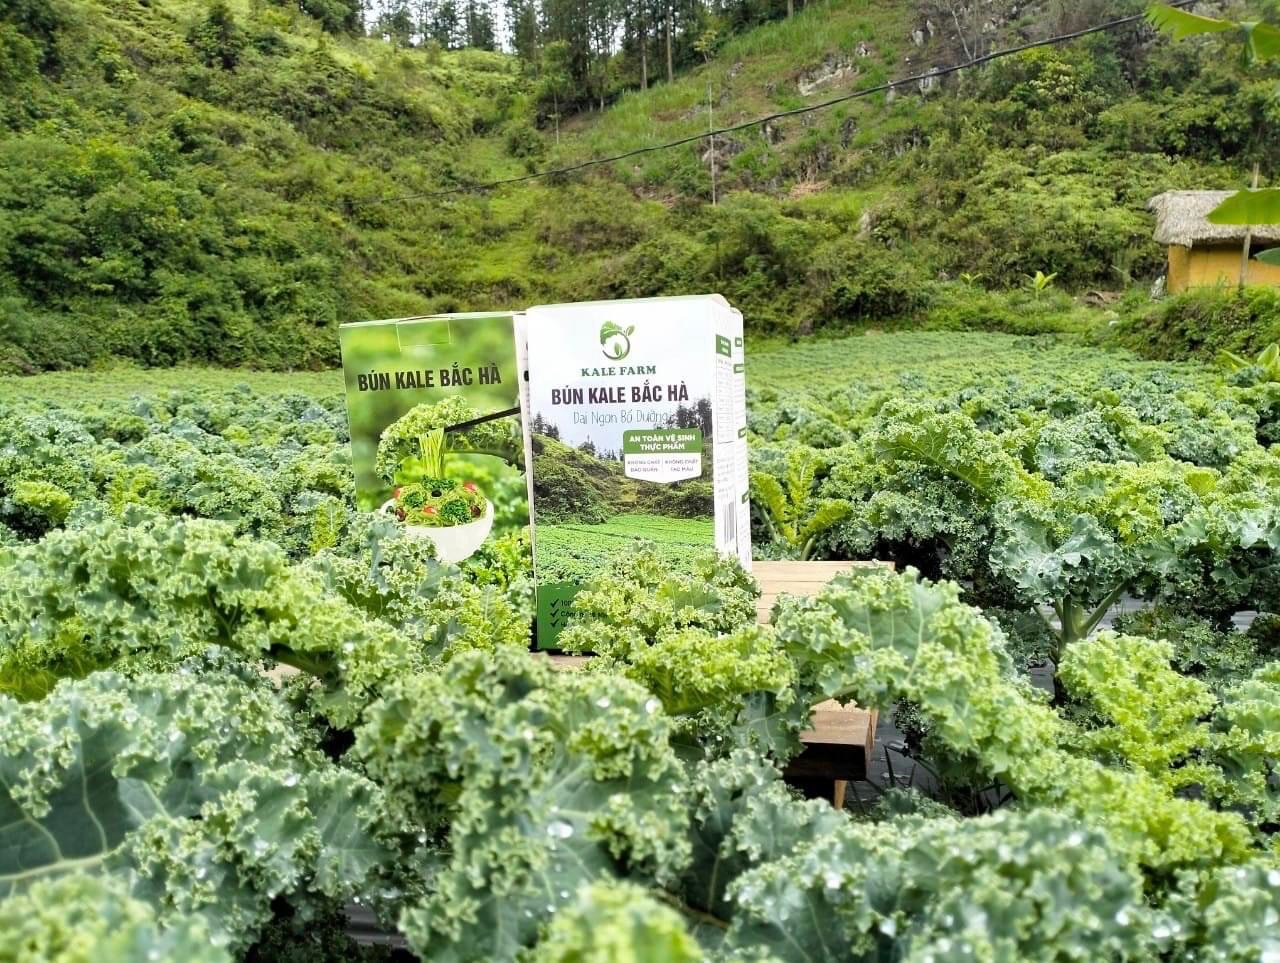 Tham quan trải nghiệm tại trang trại Kale (Kale farm) ở Bắc Hà